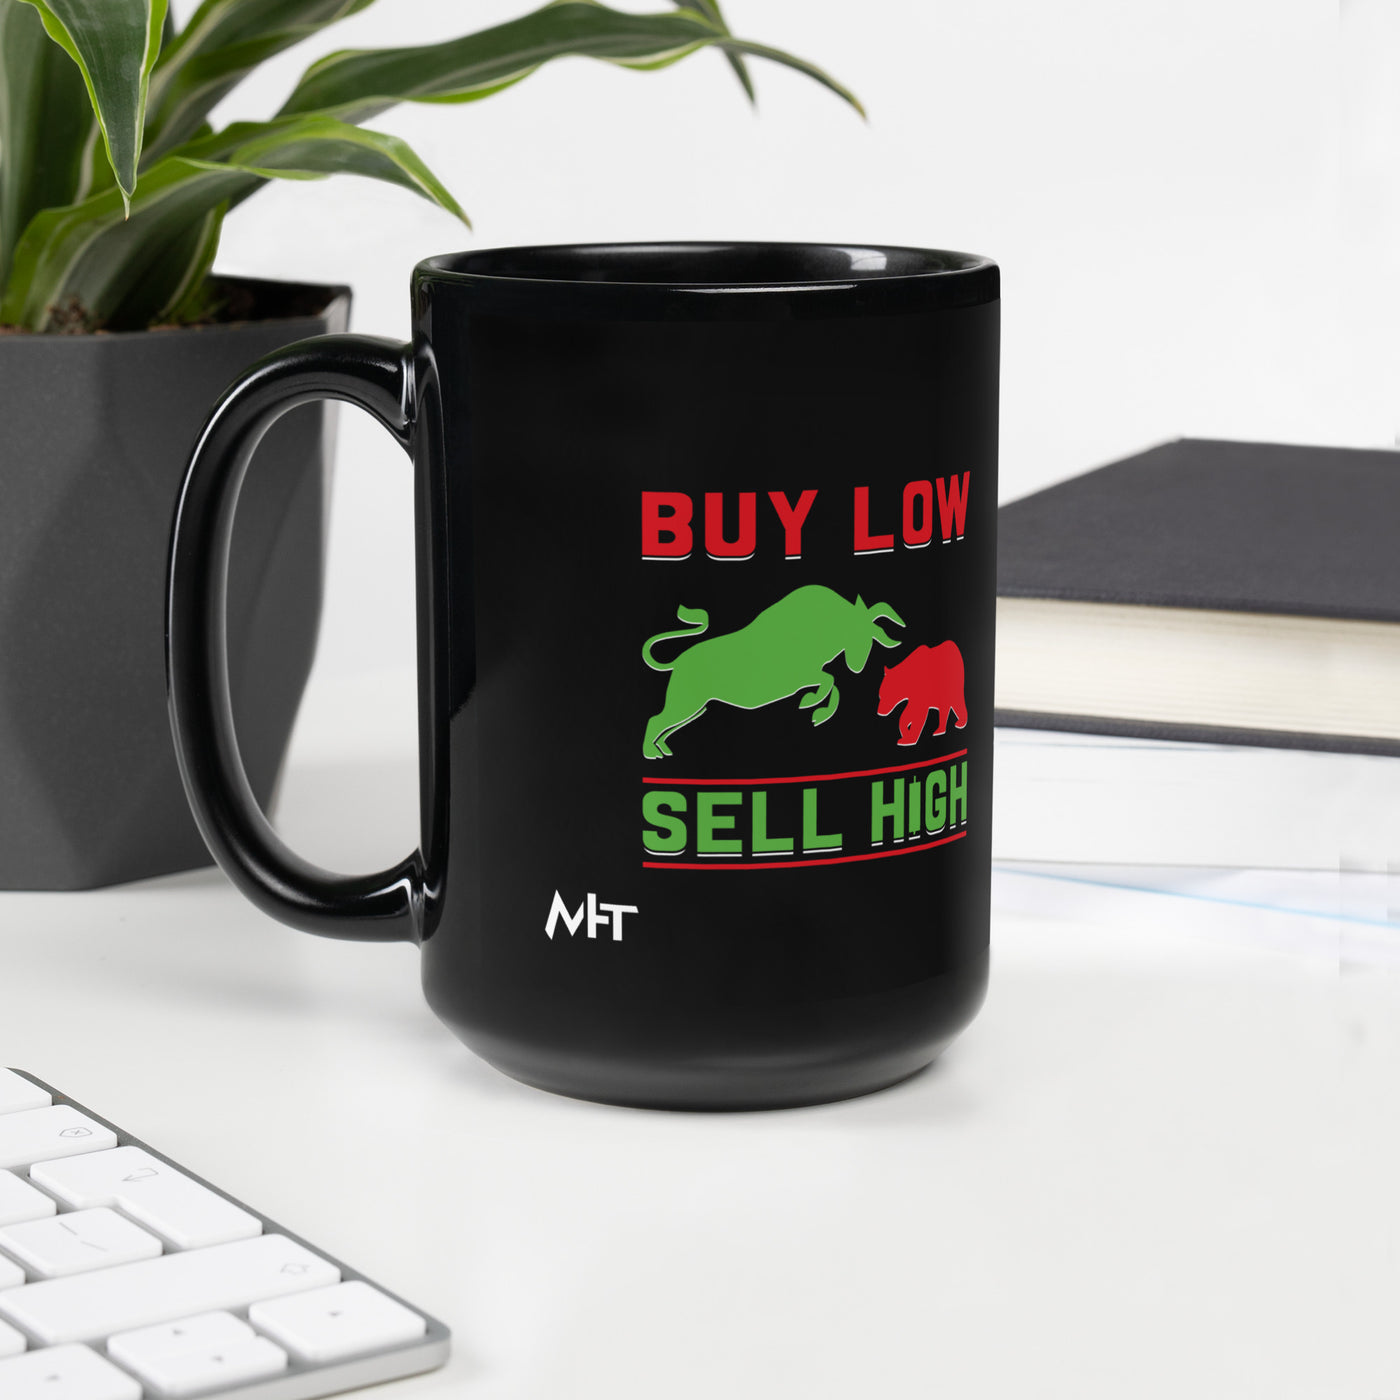 Buy low, Sell high - Black Glossy Mug